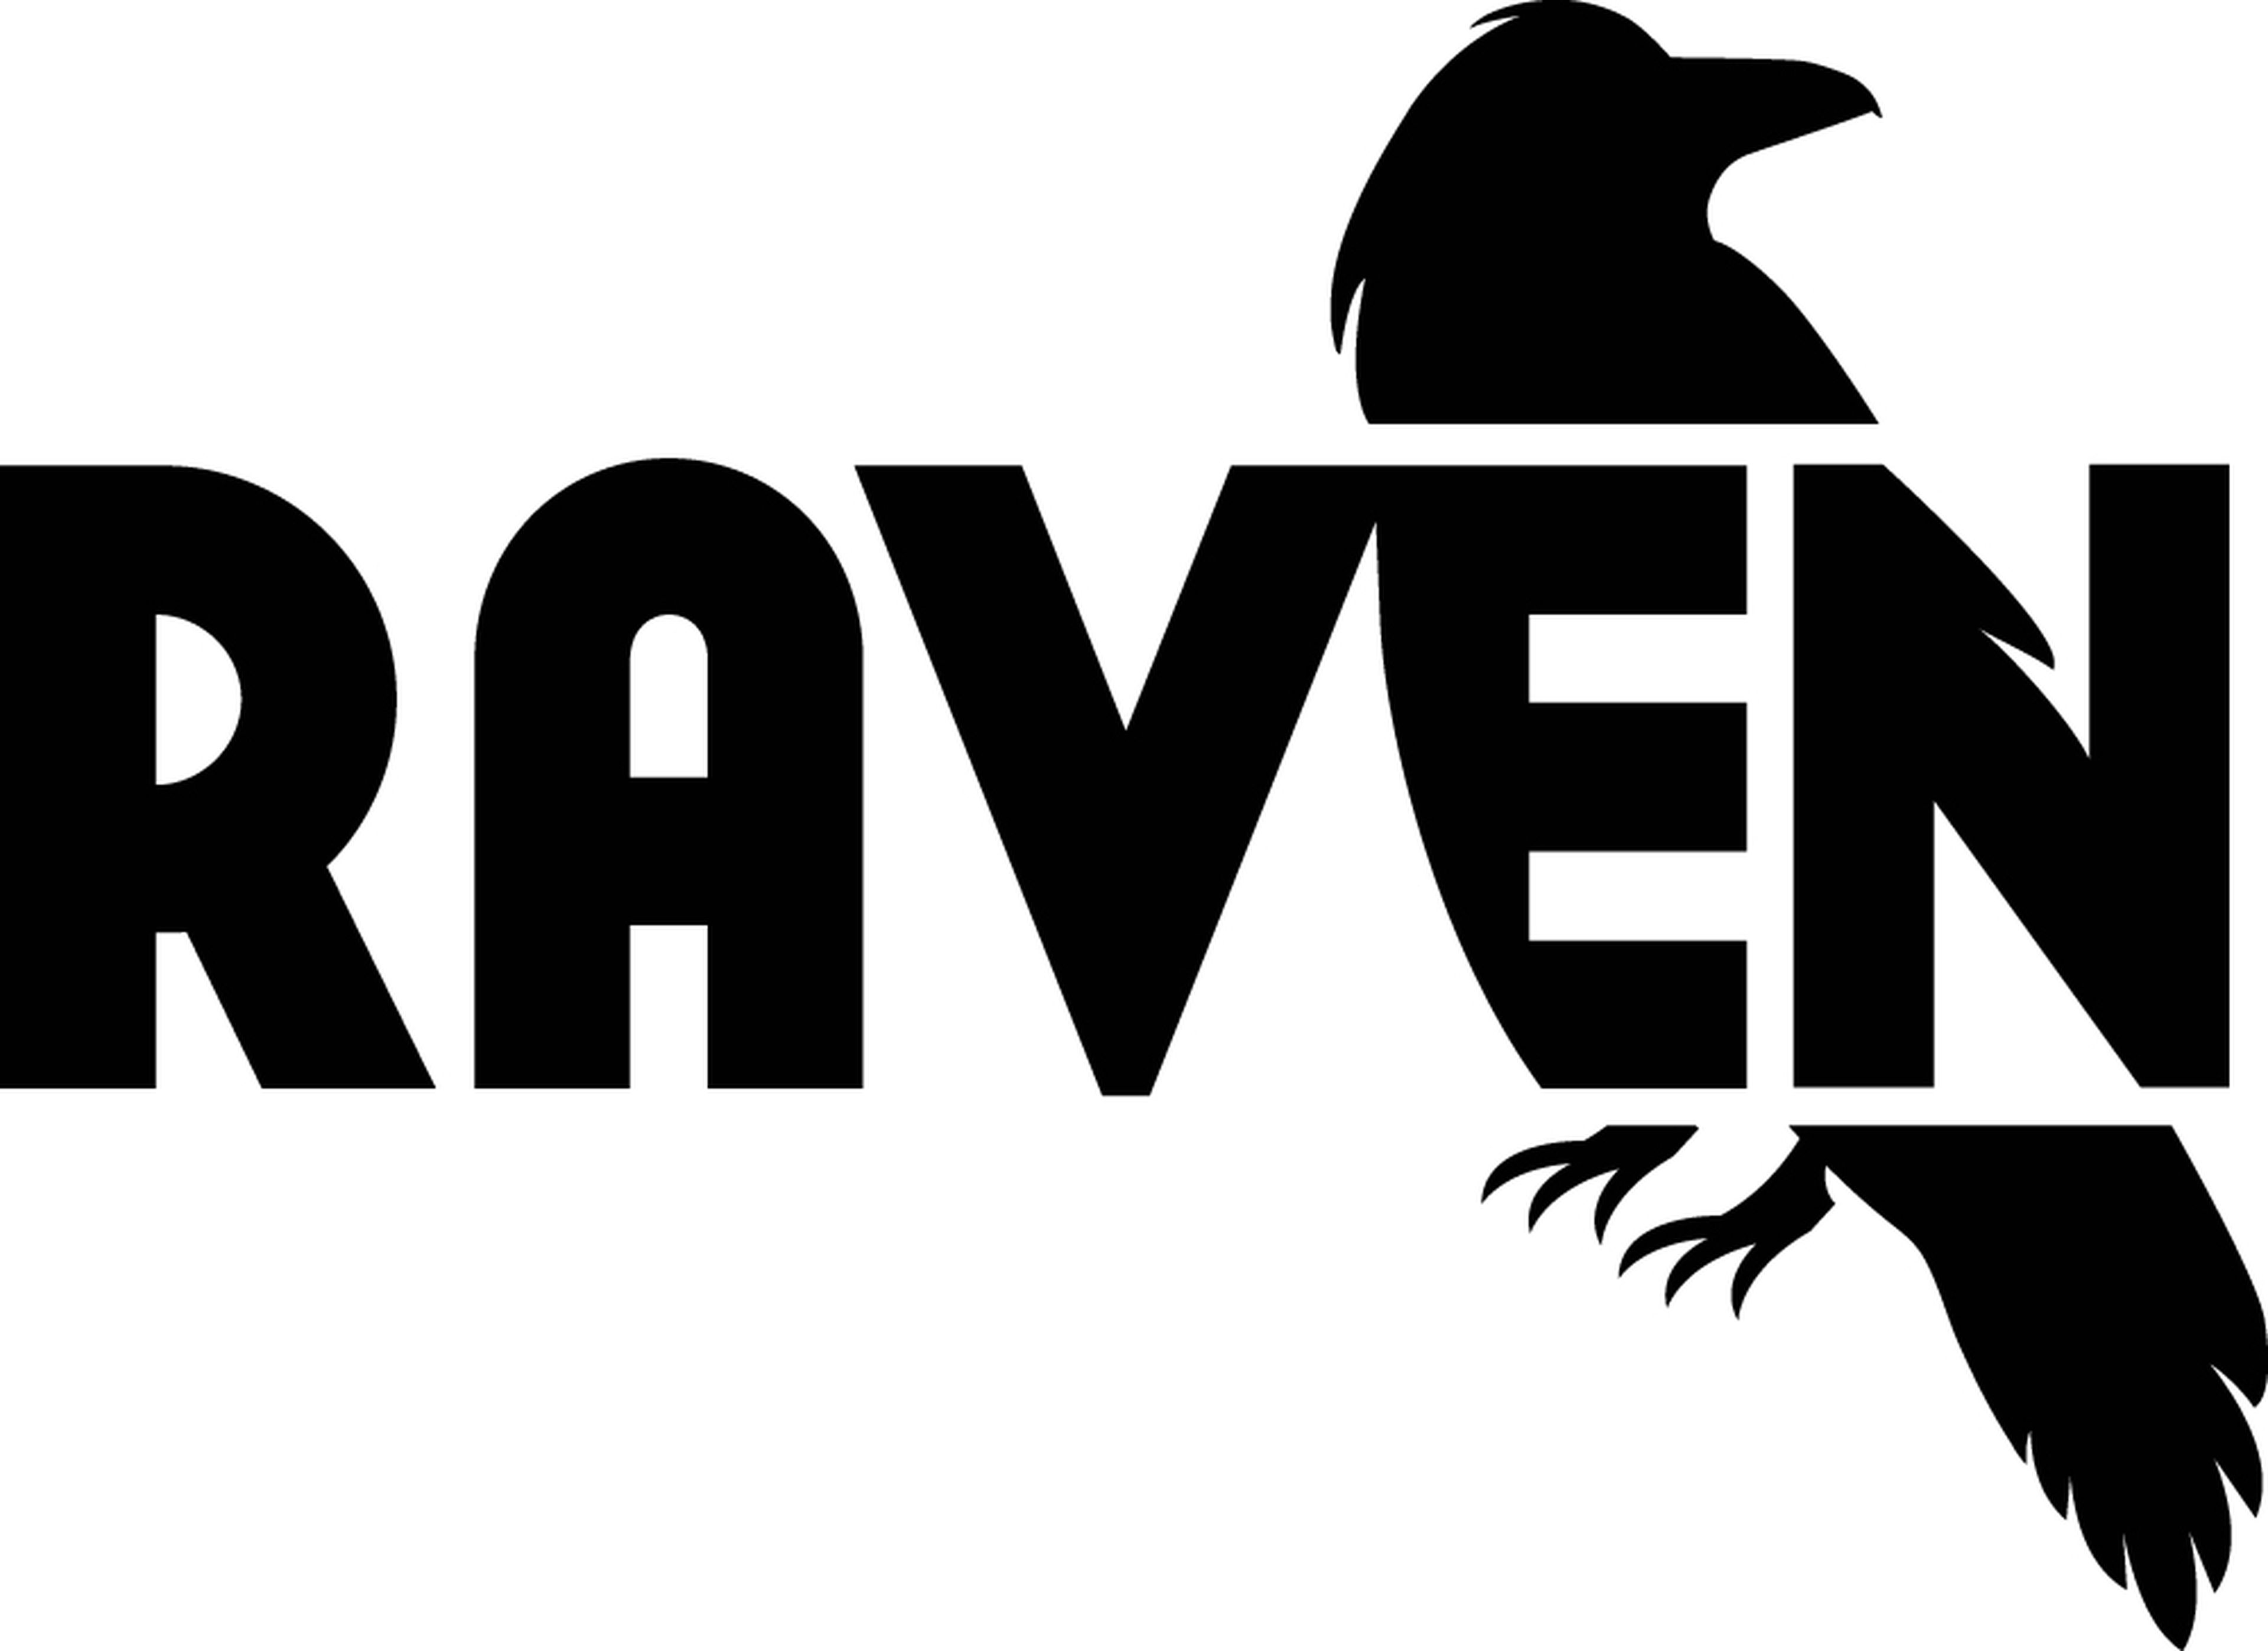 Schema creator by Raven creador de datos estructurados